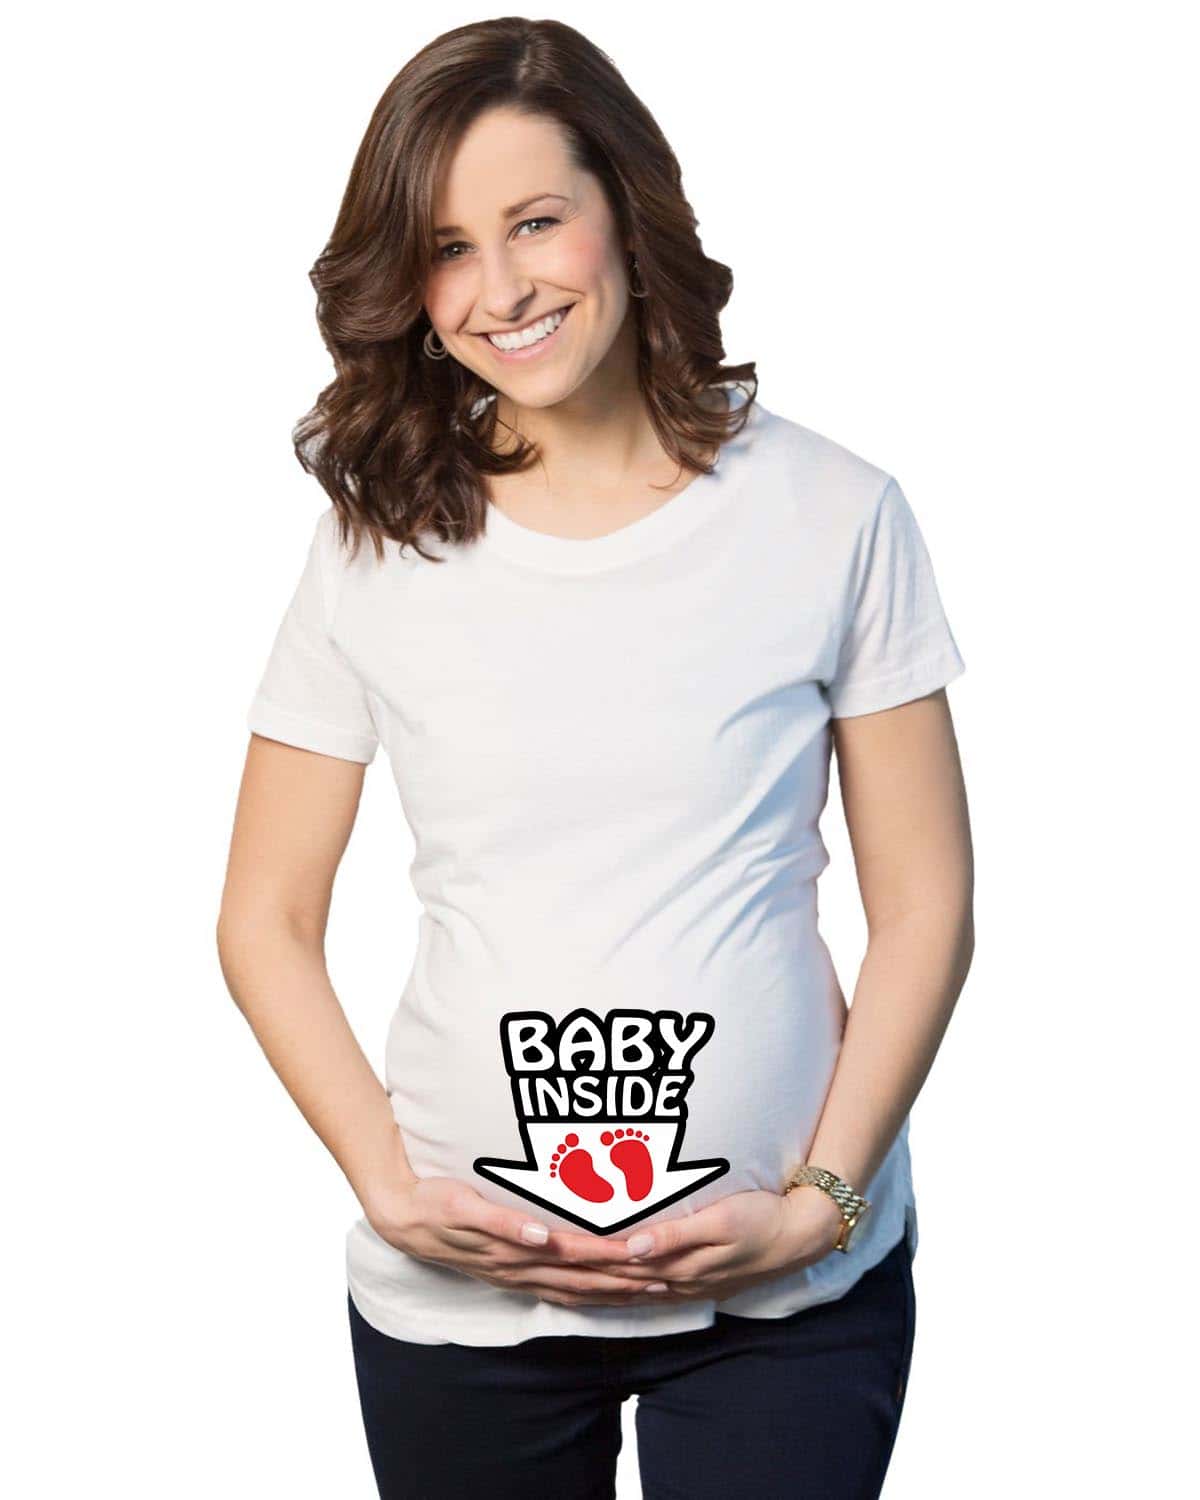 Cute Baby hidden inside Printed Maternity T-Shirts